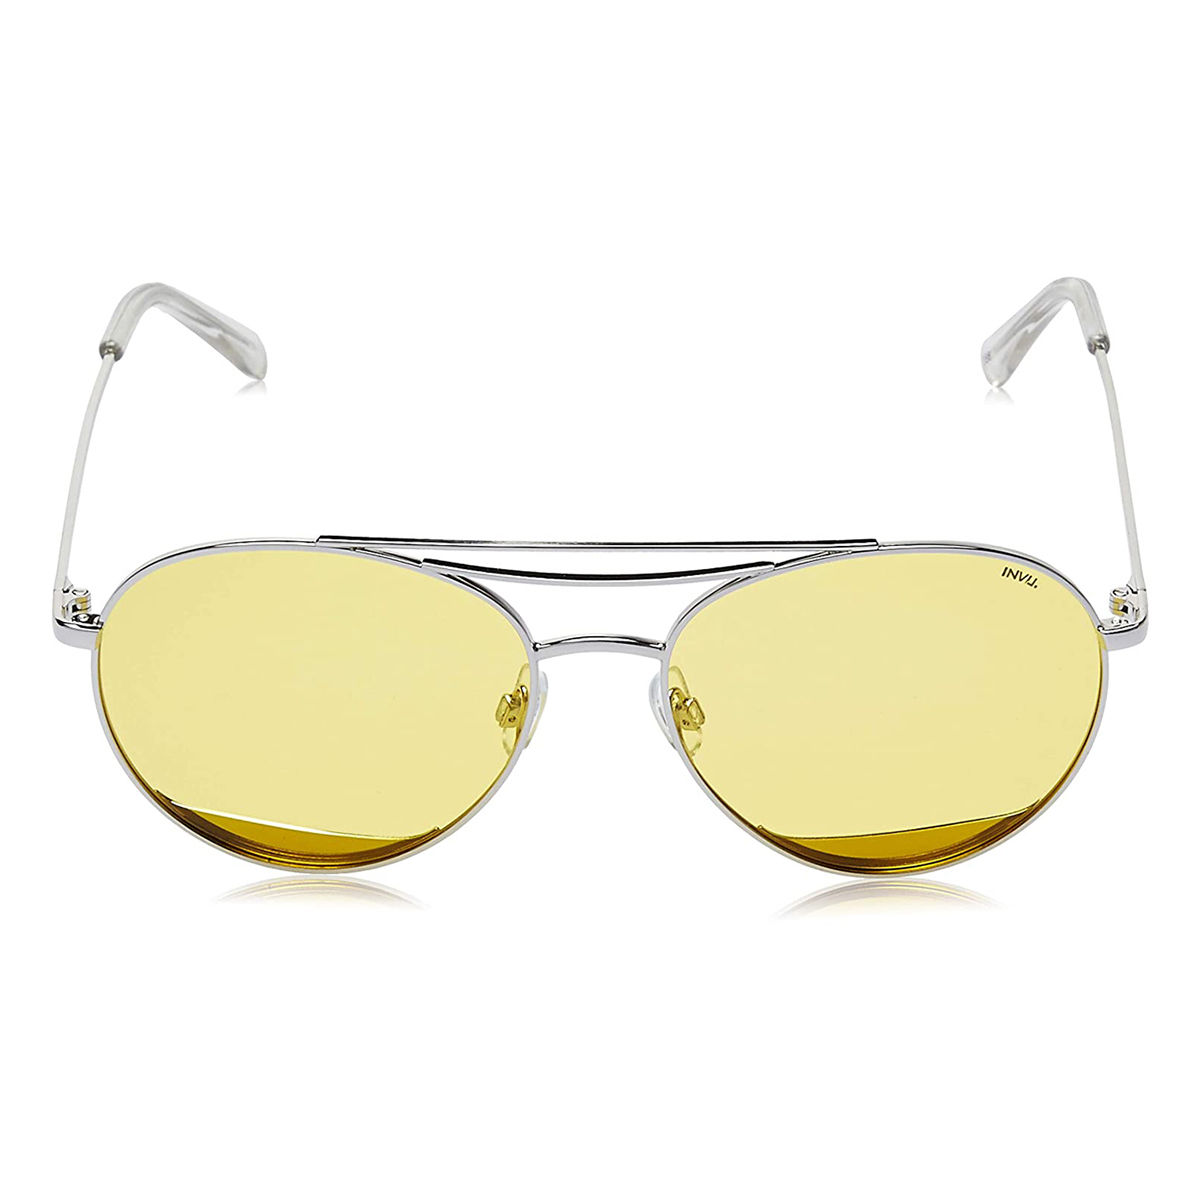 Invu Sunglasses Aviator With Yellow Lens For Men